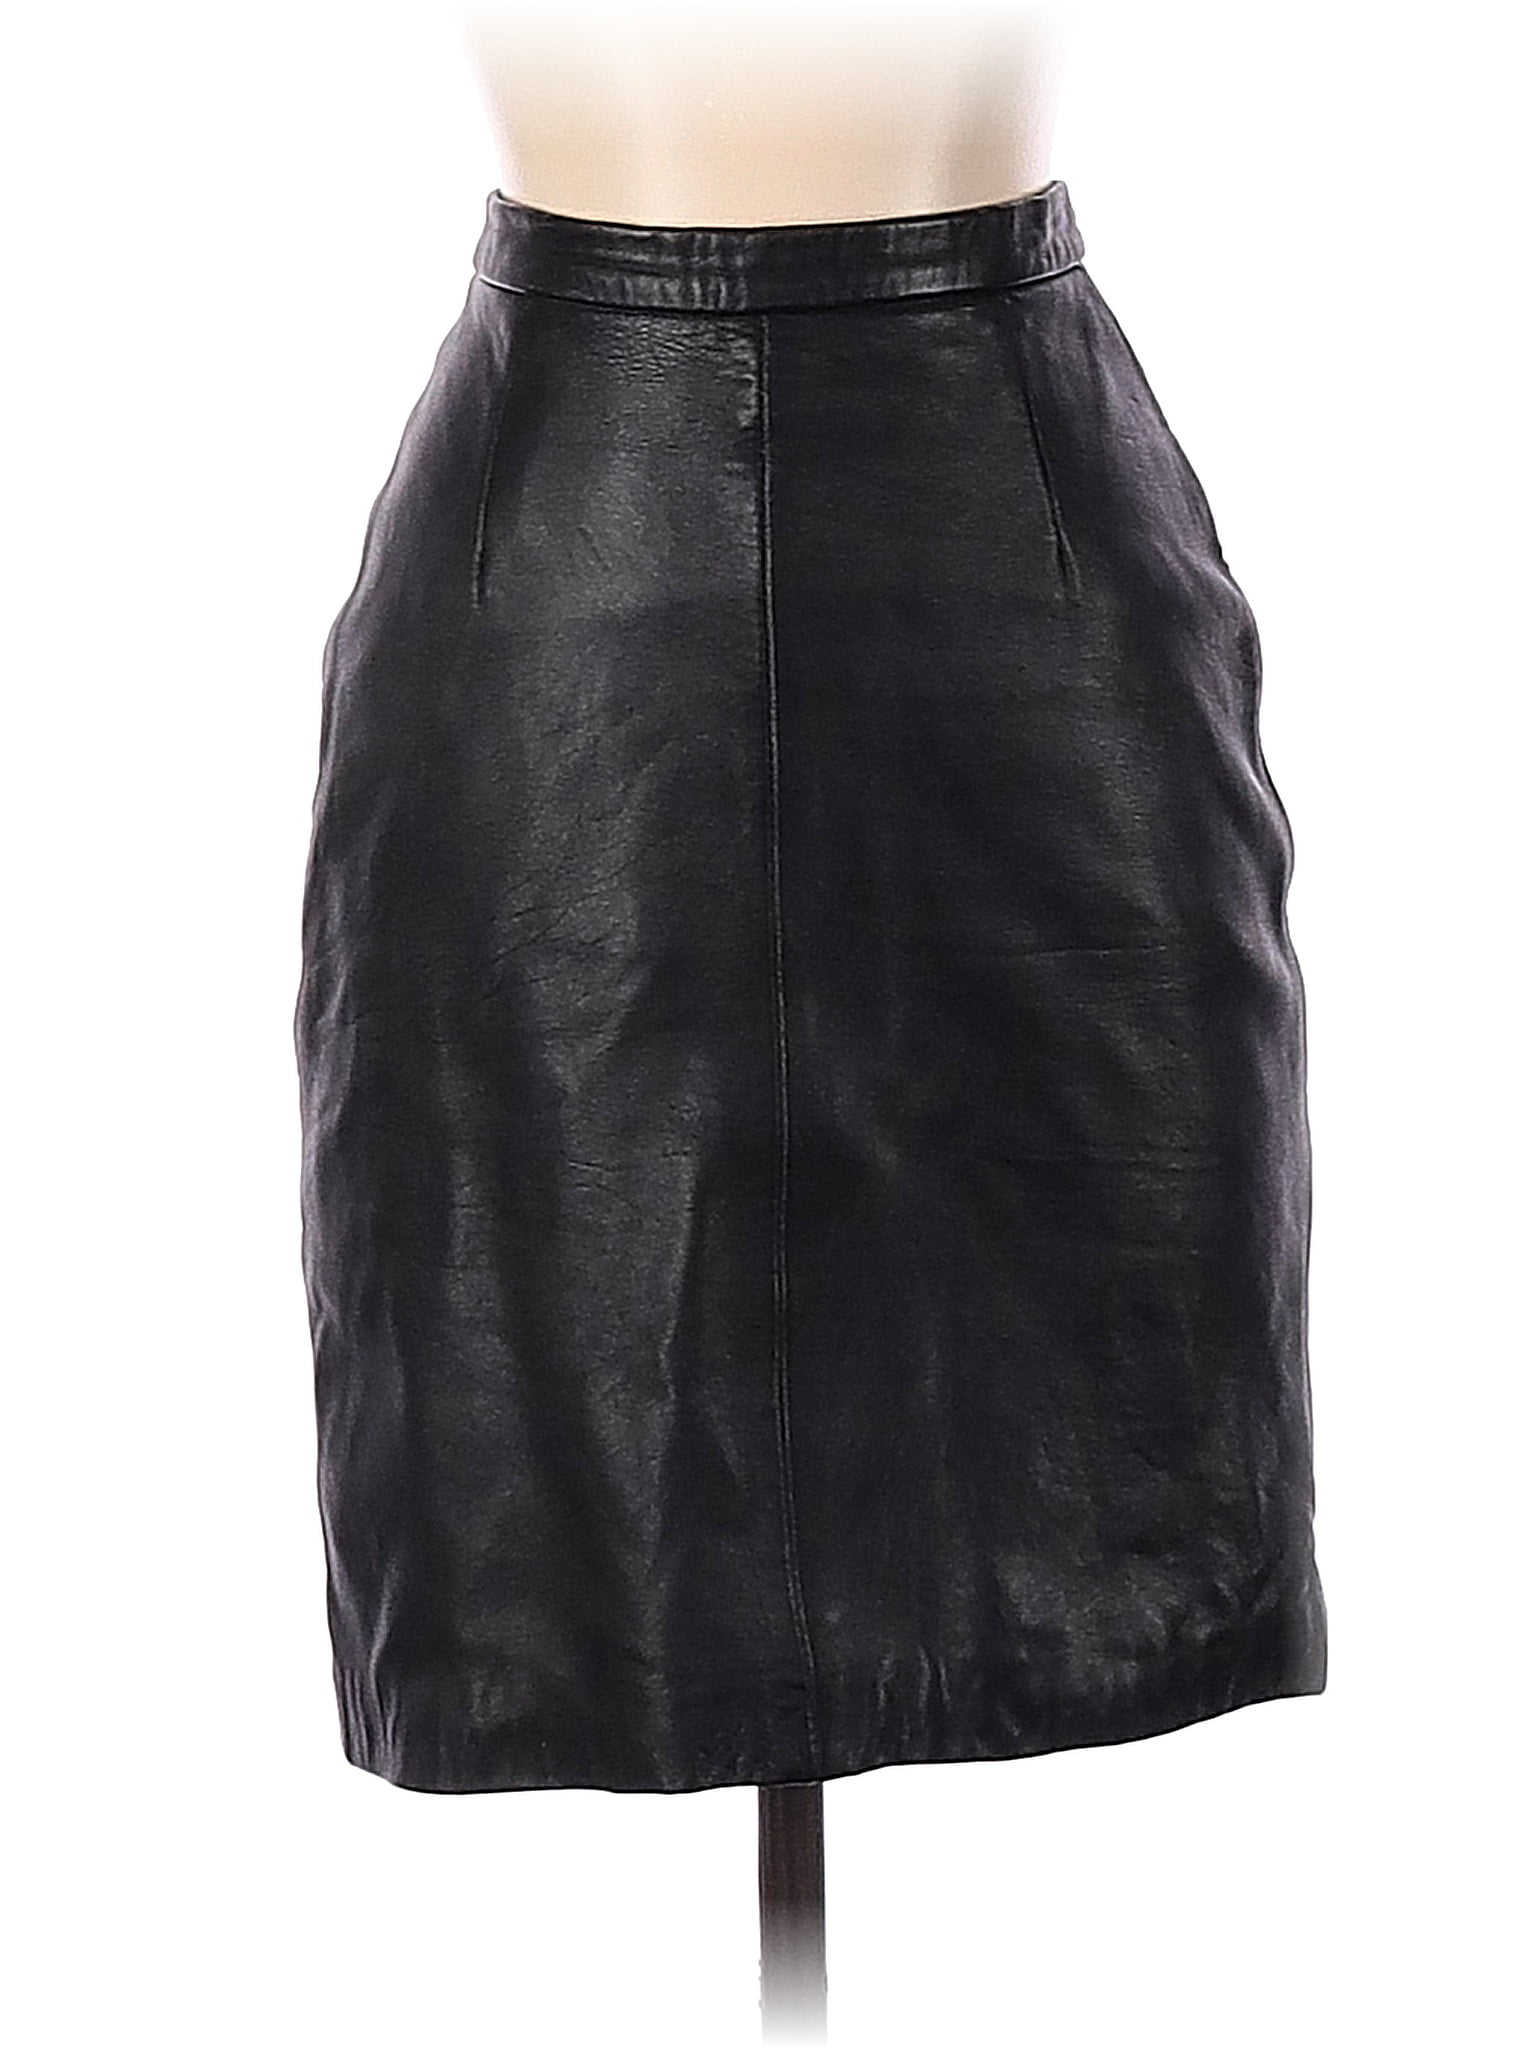 Michael Hoban Black Leather Skirt Size 3 - 4 - 86% off | ThredUp